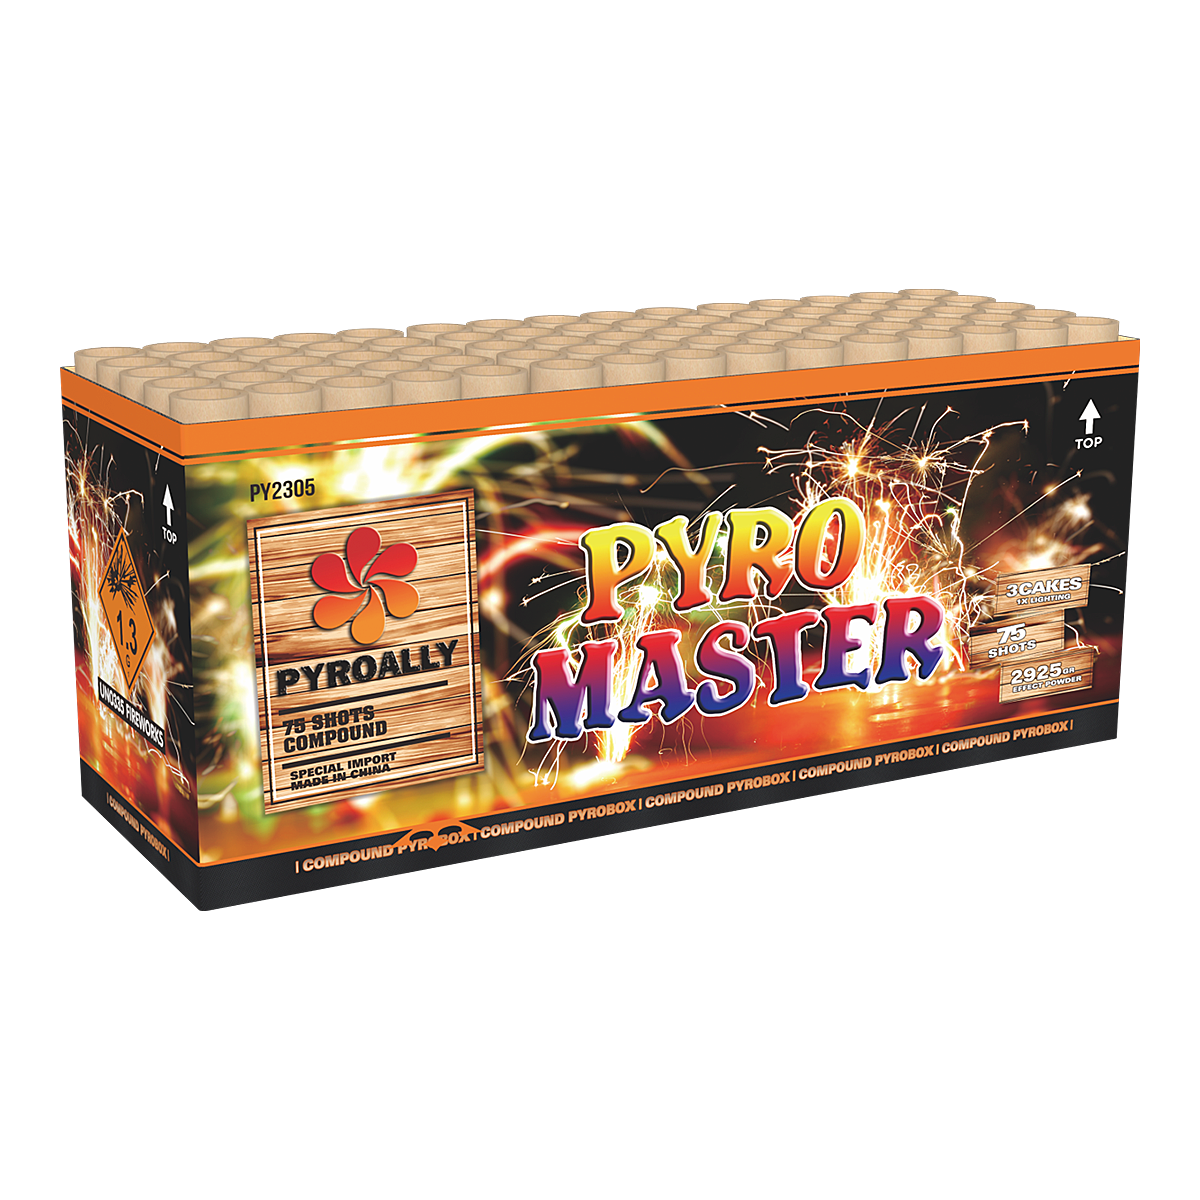 PY2305 - PYRO MASTER Compound fireworks